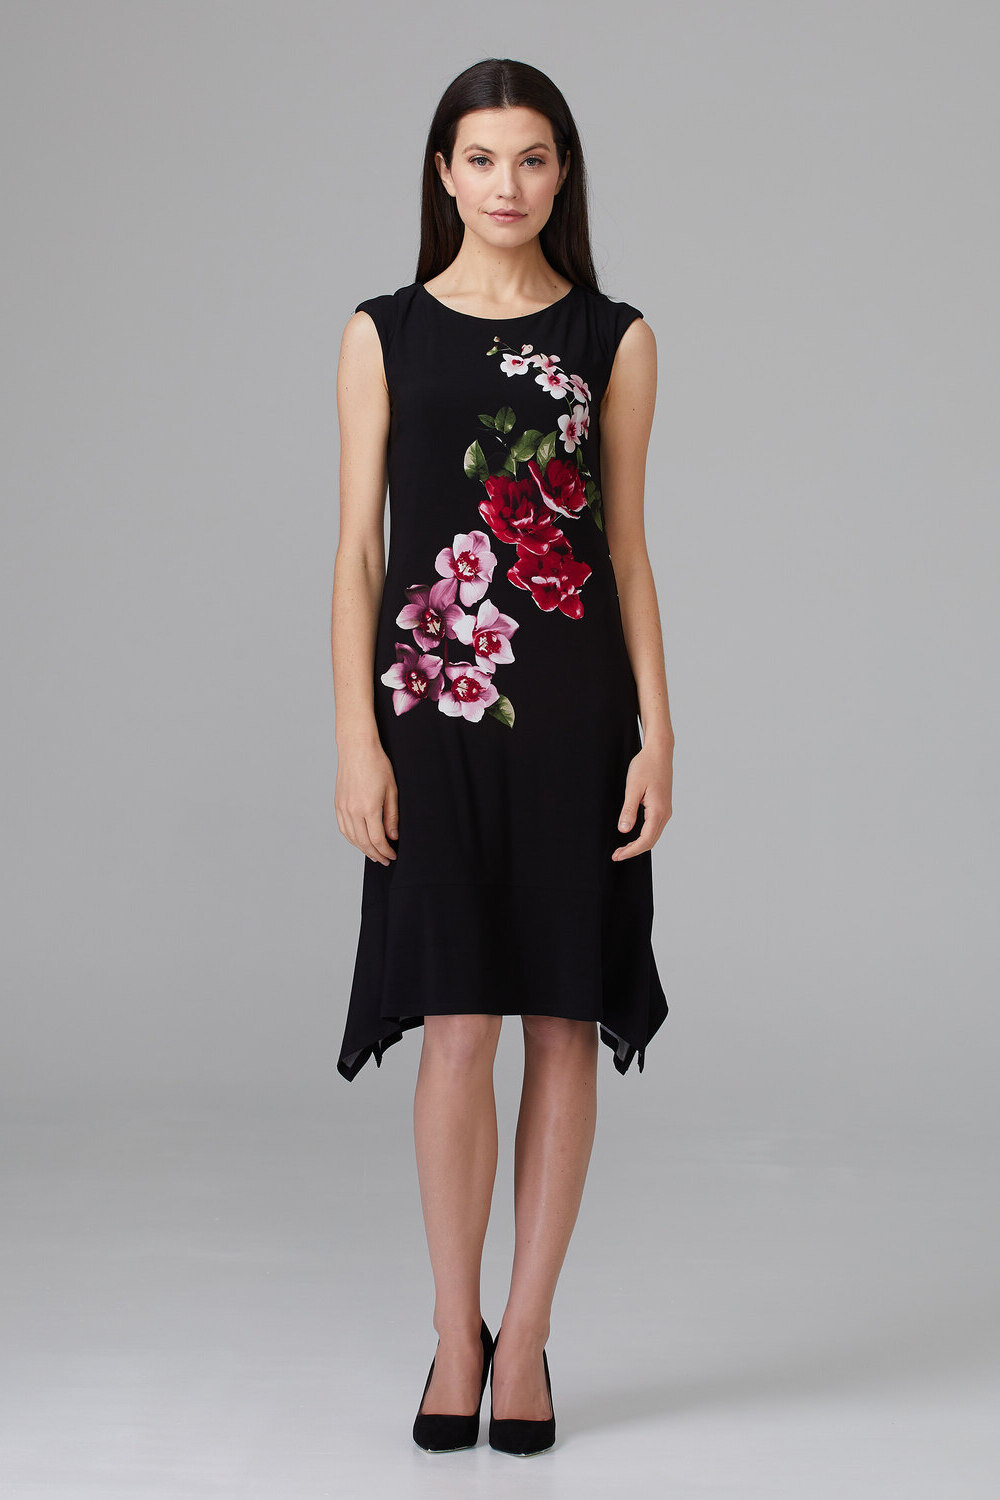 Joseph Ribkoff Dress Style 201287. Black/multi